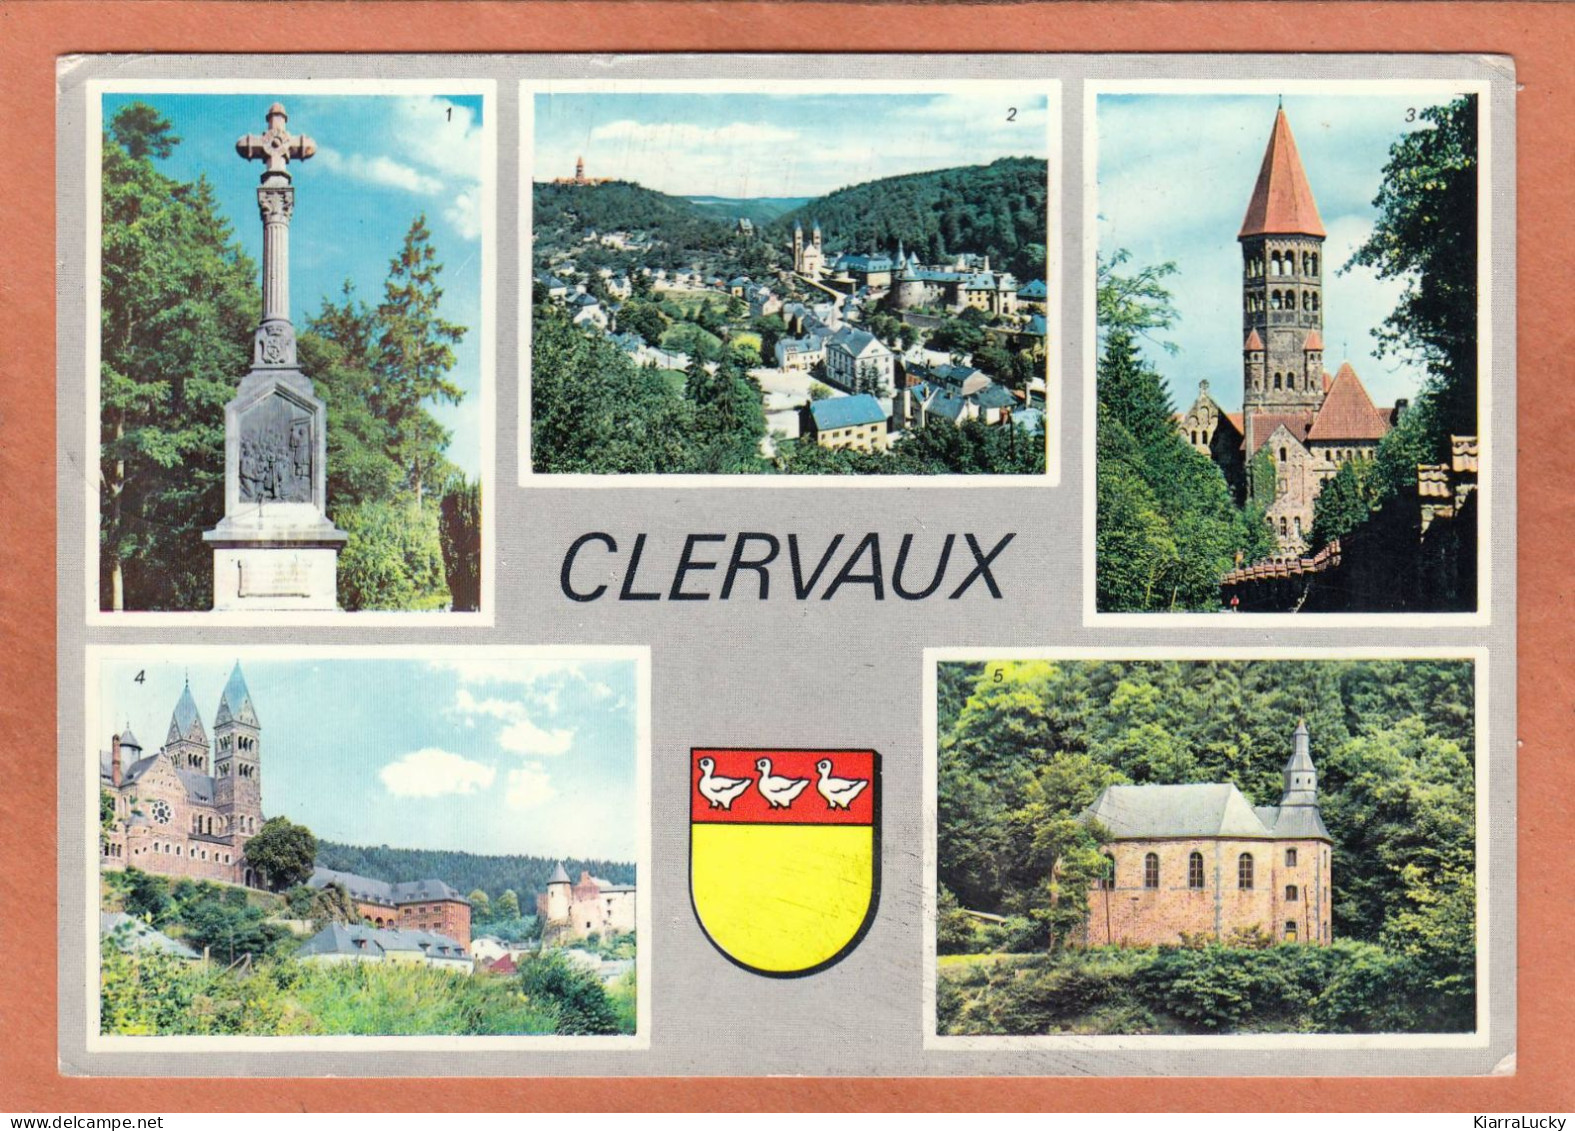 CLERVAUX - LUXEMBOURG - MULTIVUES + BLASON - ECRITE - Clervaux